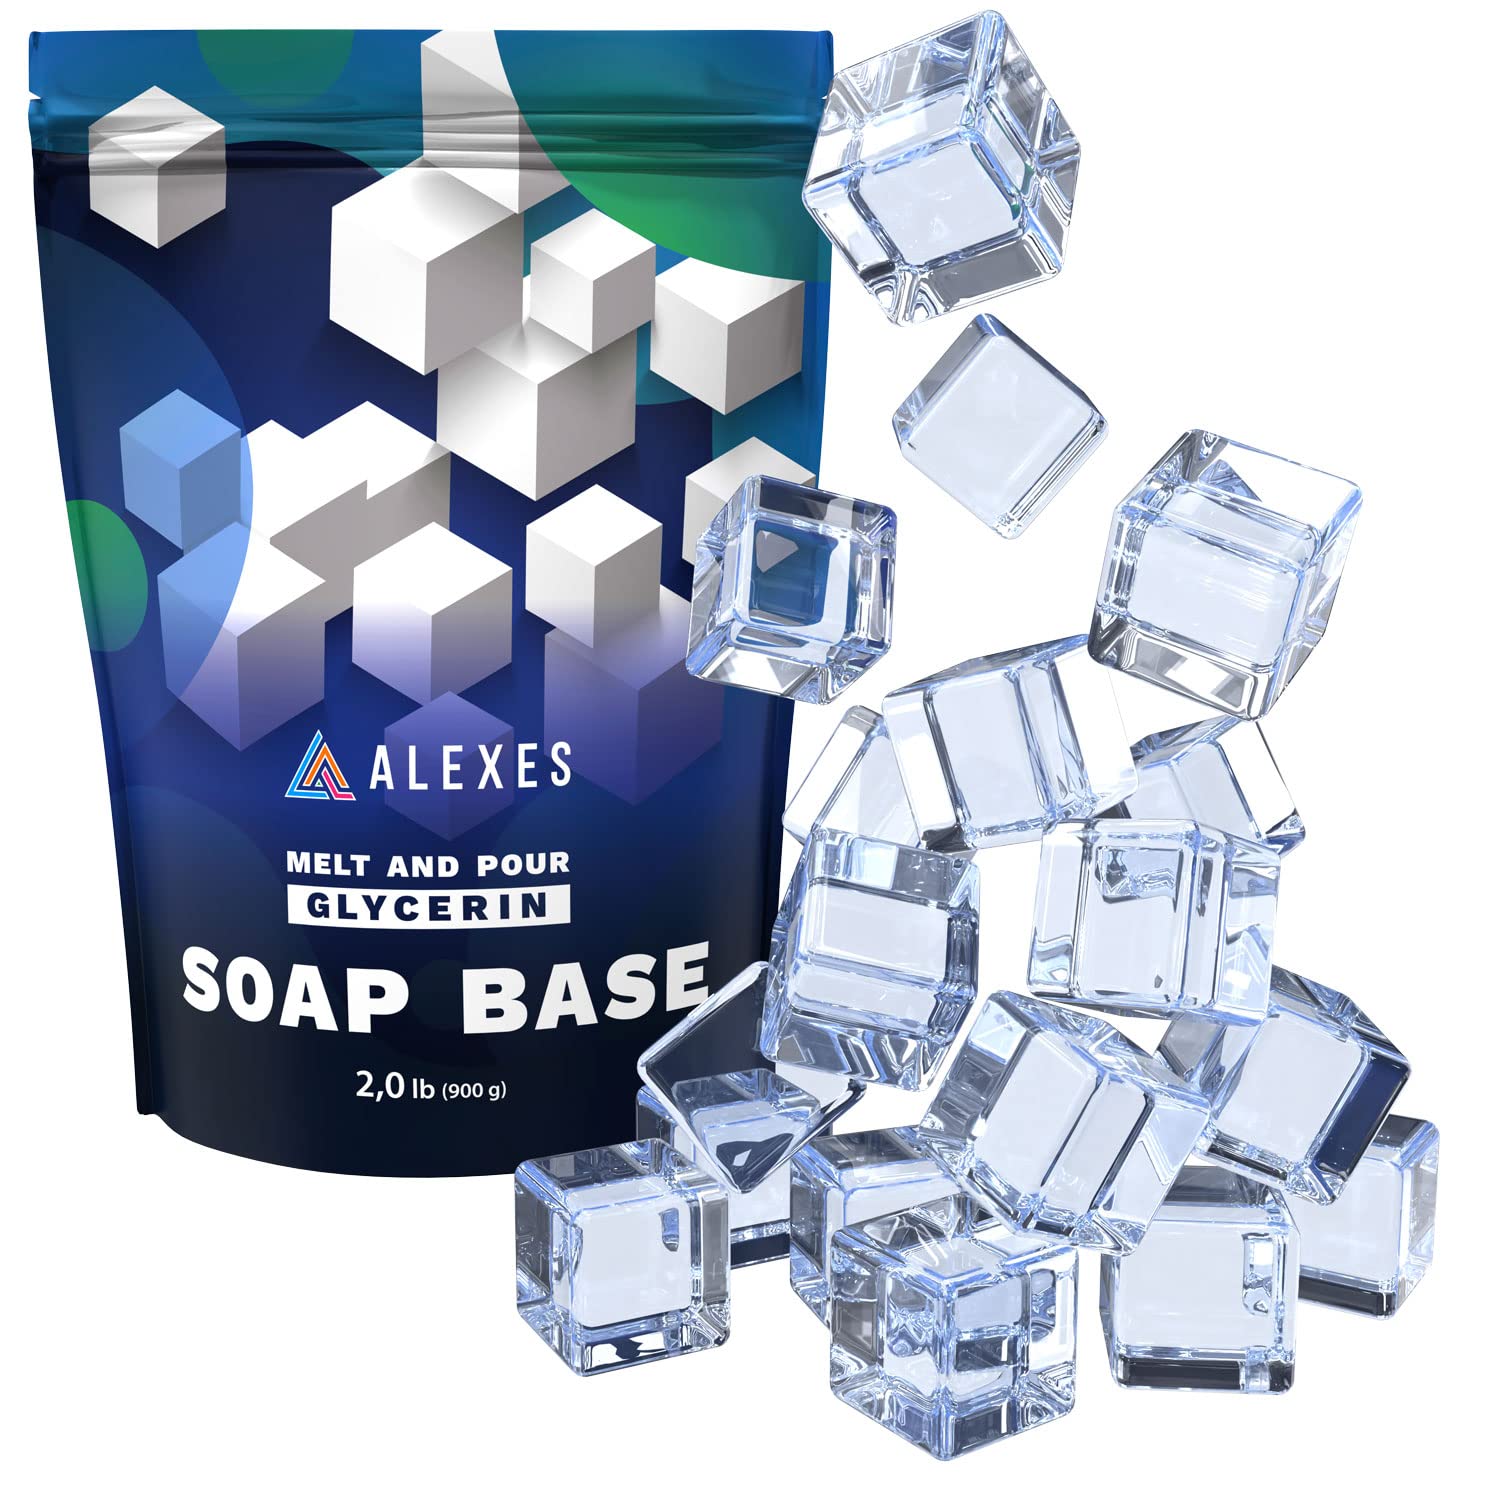 ALEXES Glycerin Melt and Pour Soap Base - Soap Base for Soap